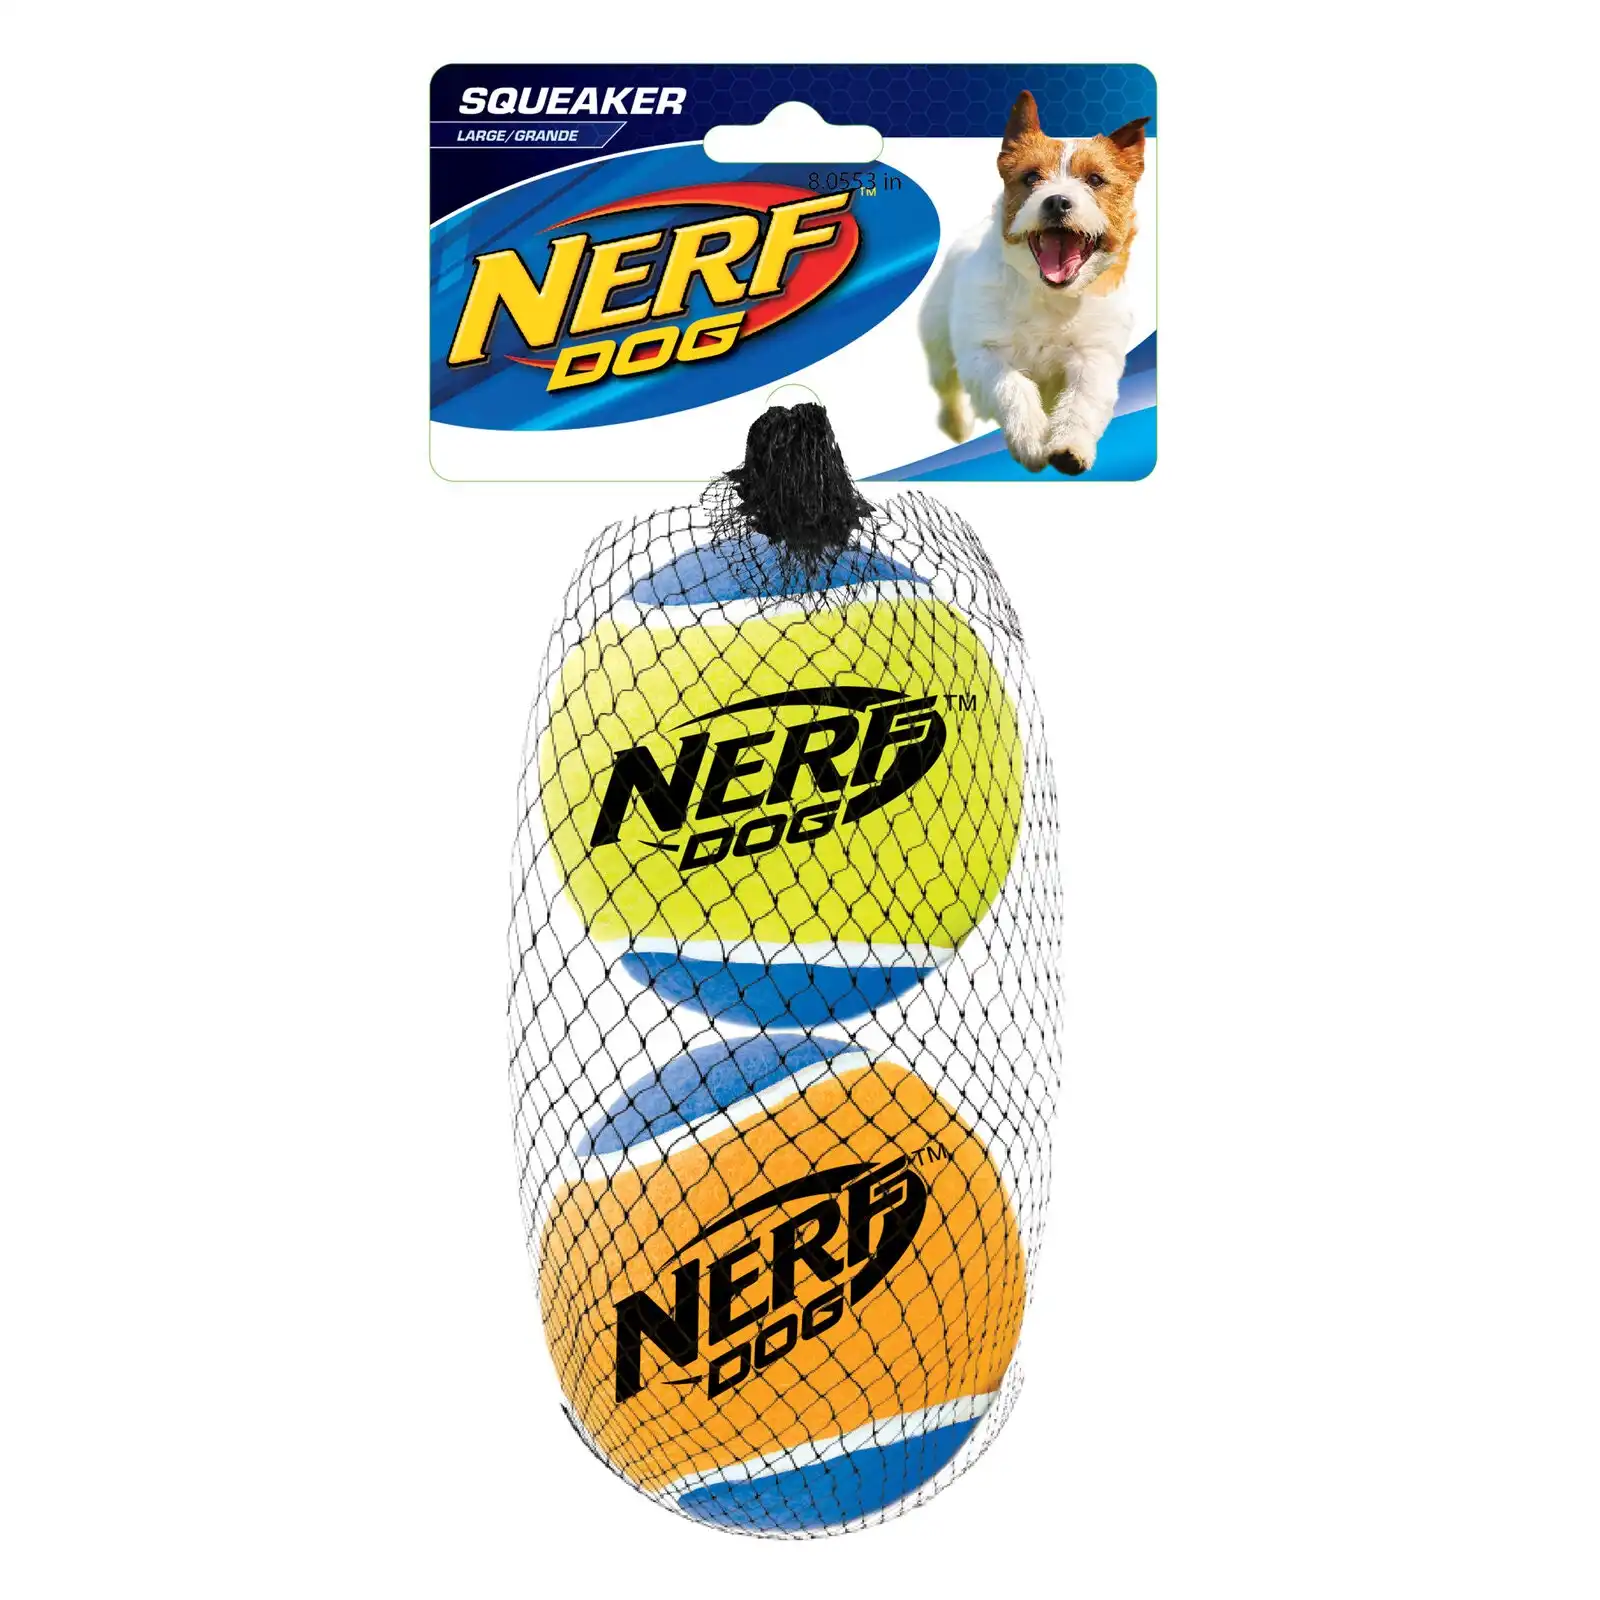 2x Nerf Dog 3" Squeak Tennis Balls Multi Use Squeak Play Fetch Throw Play Toy